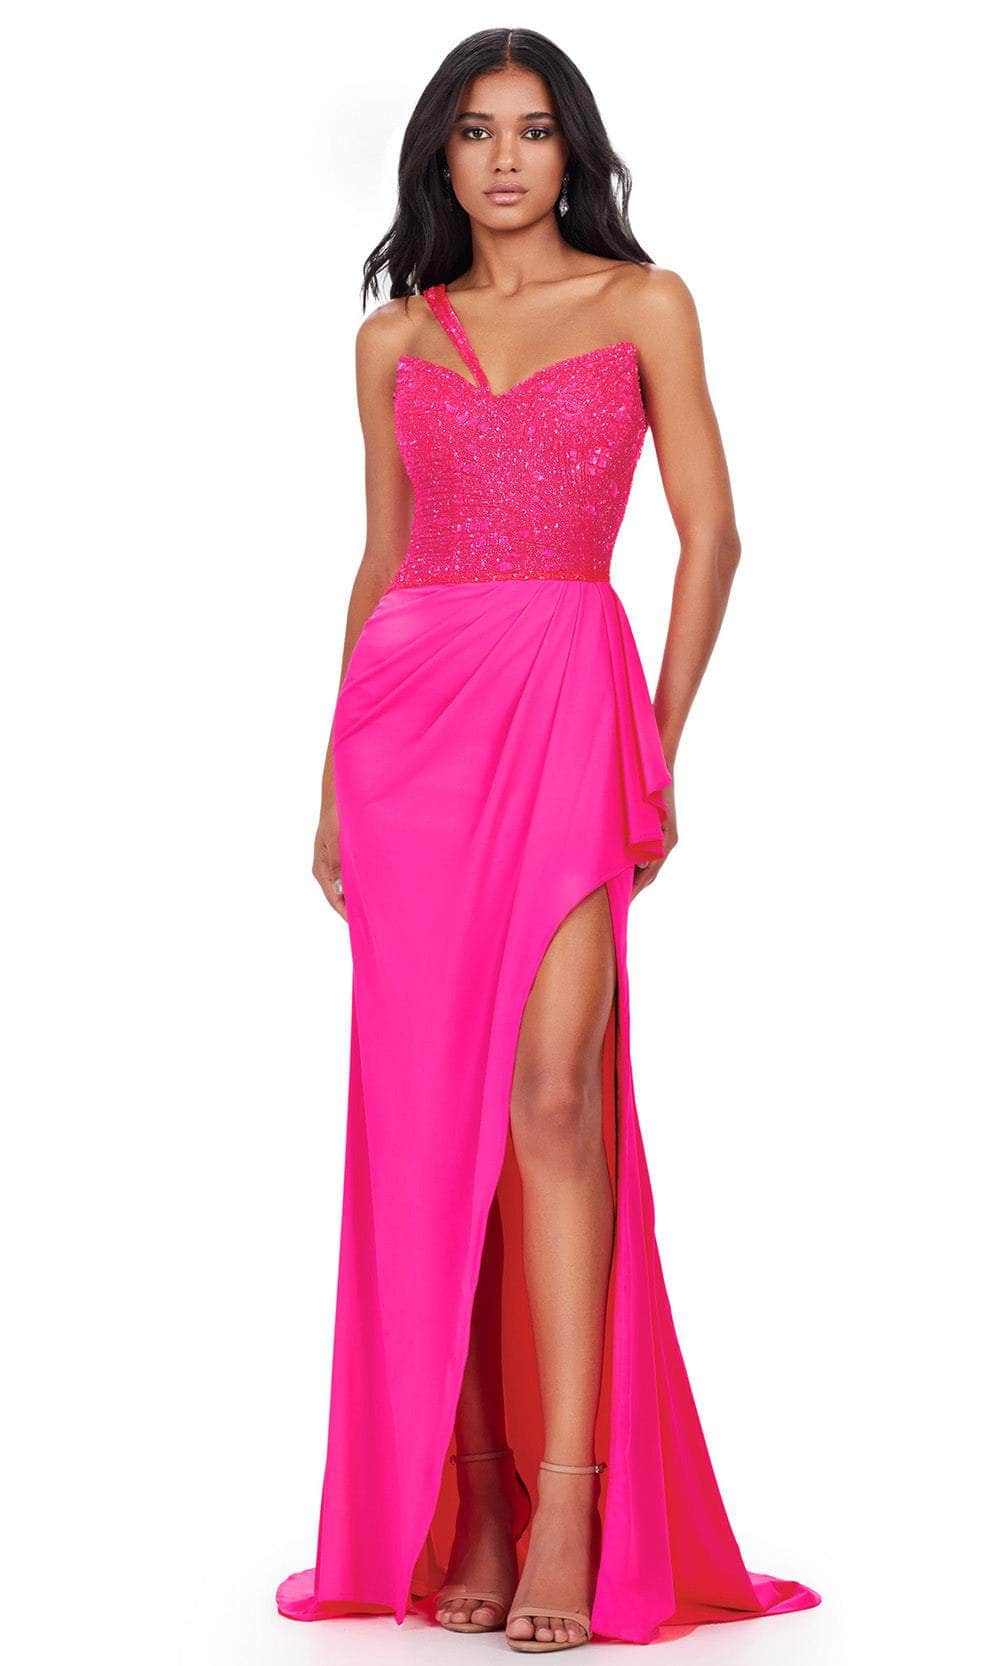 Ashley Lauren 11454 - Beaded Bodice Prom Dress 00 /  Hot Pink